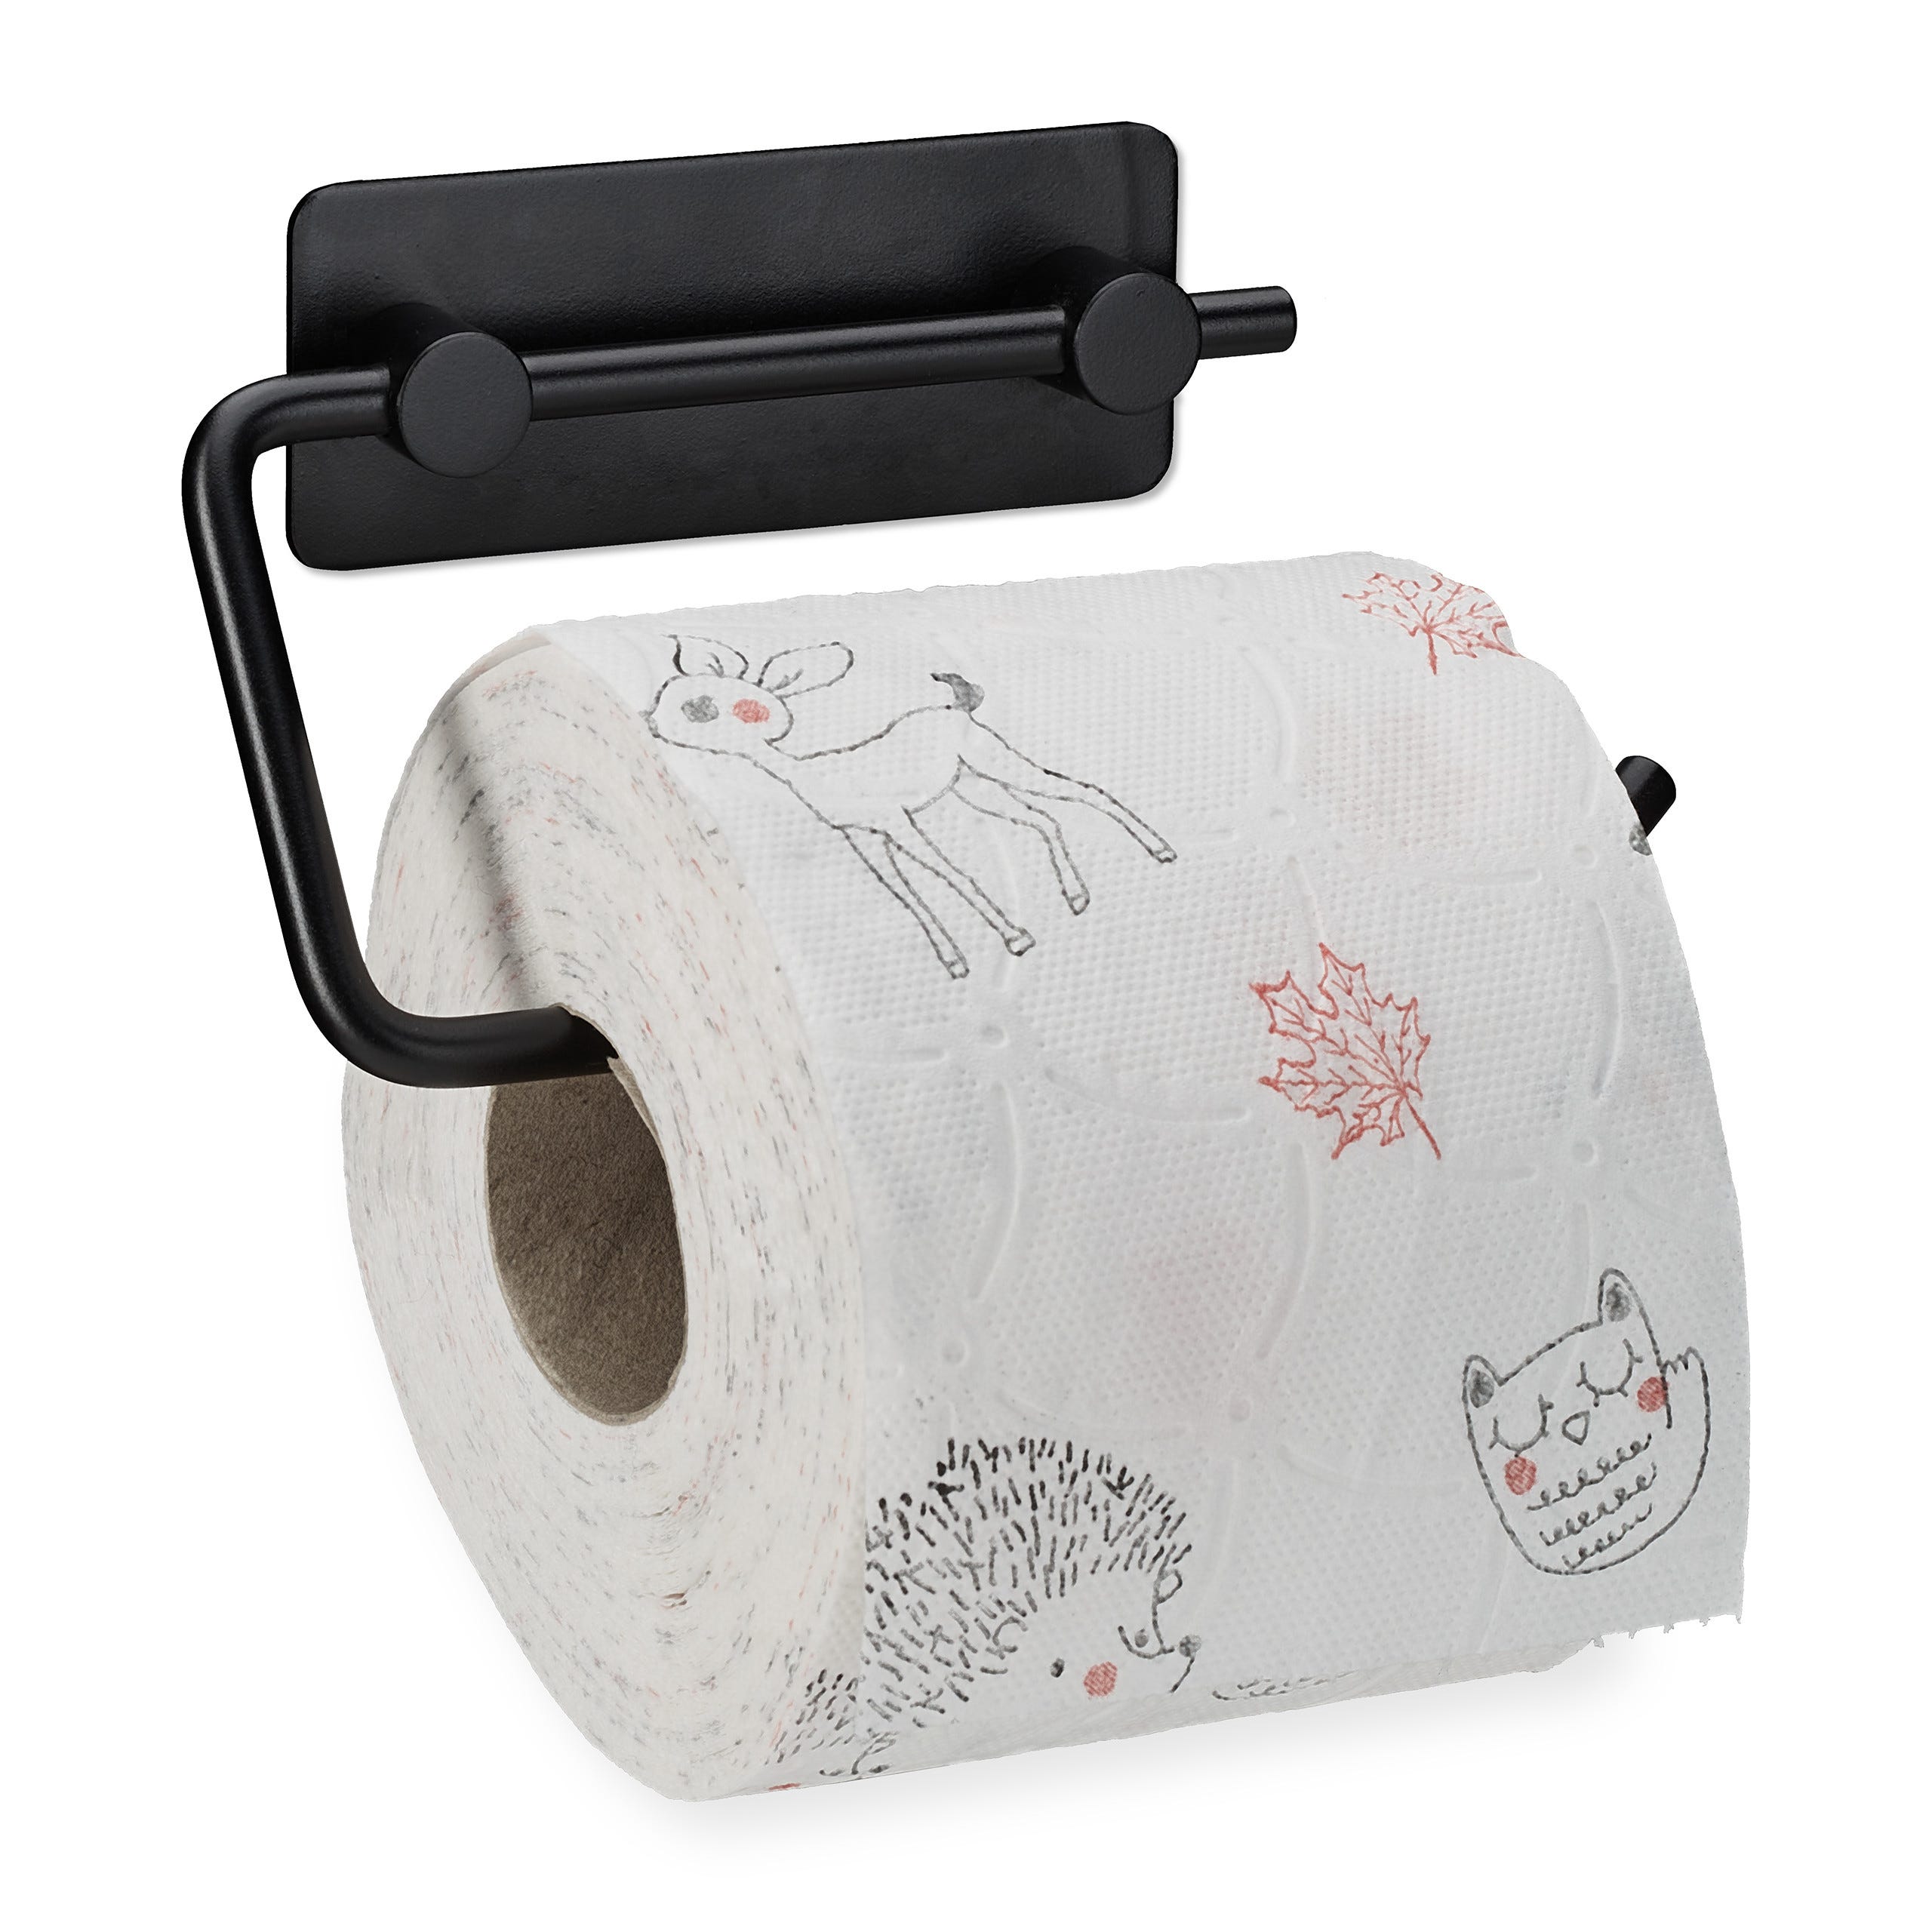 RENOVA | Papier toilette Noir Renova | #BlackToiletPaper | Papier toilette